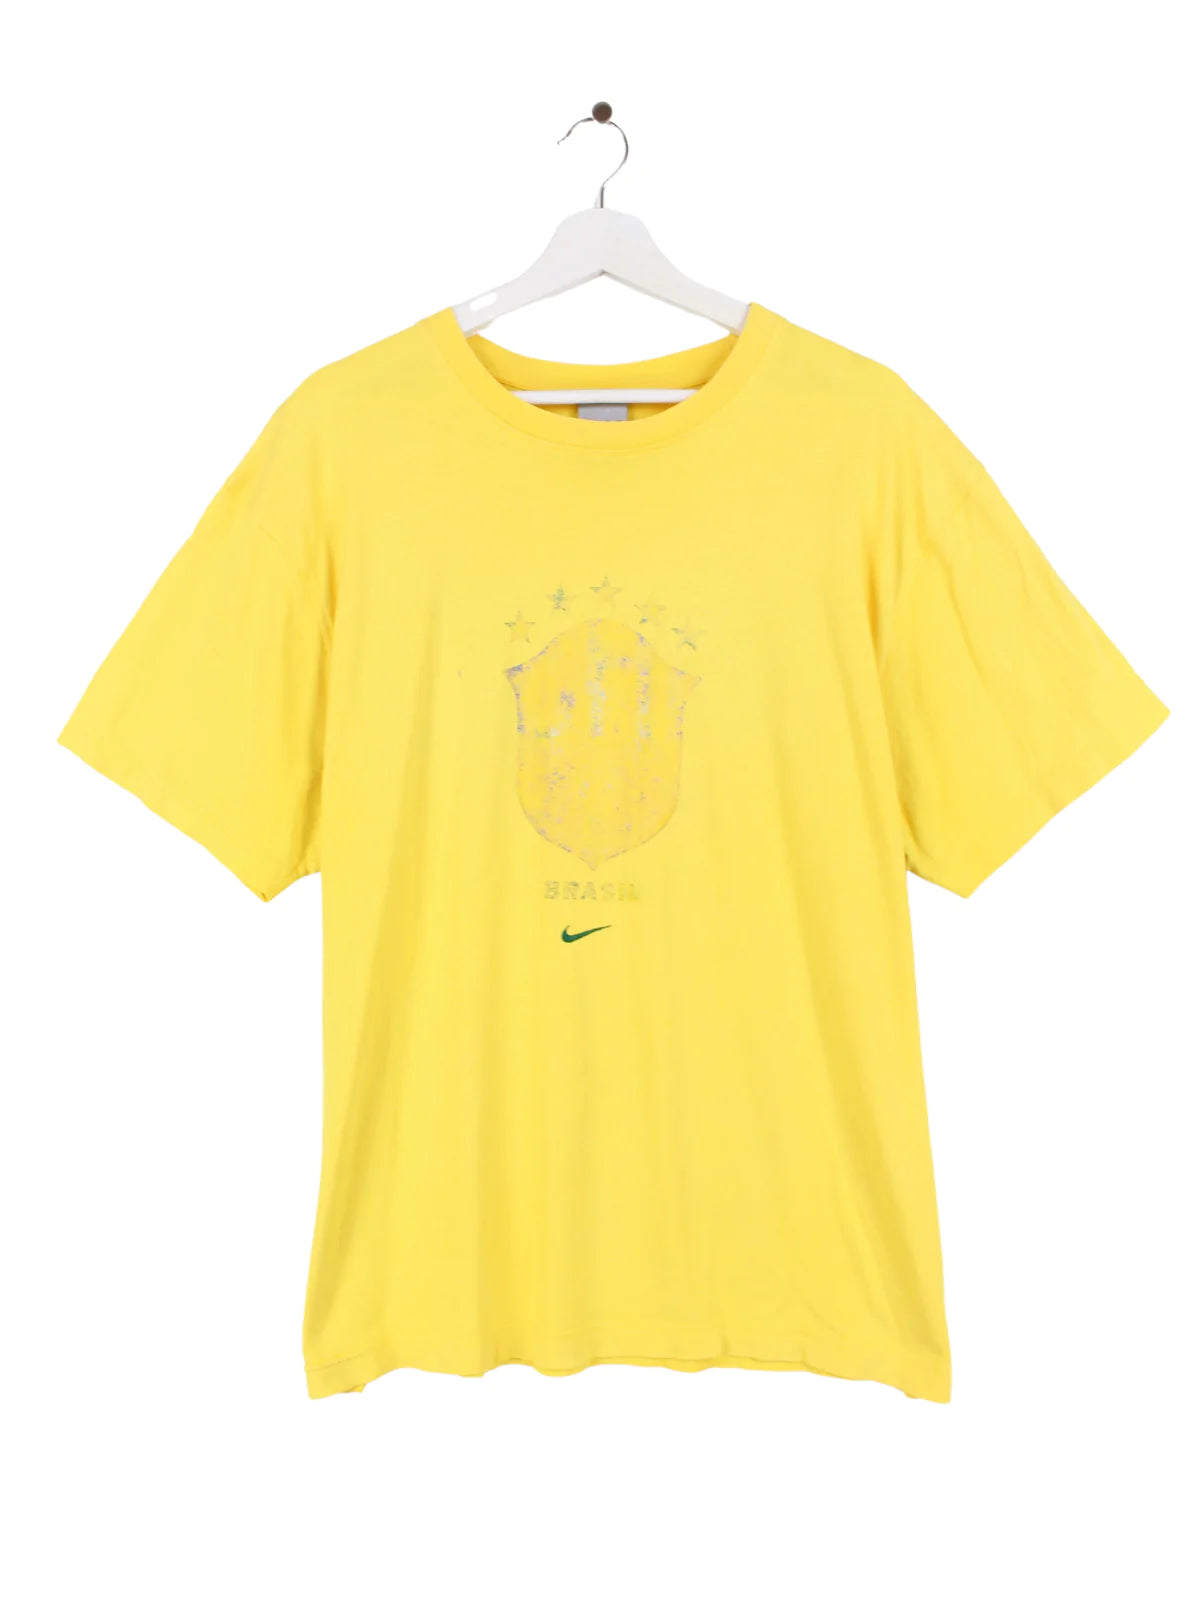 Nike Brazil Center Swoosh T-Shirt Yellow XL